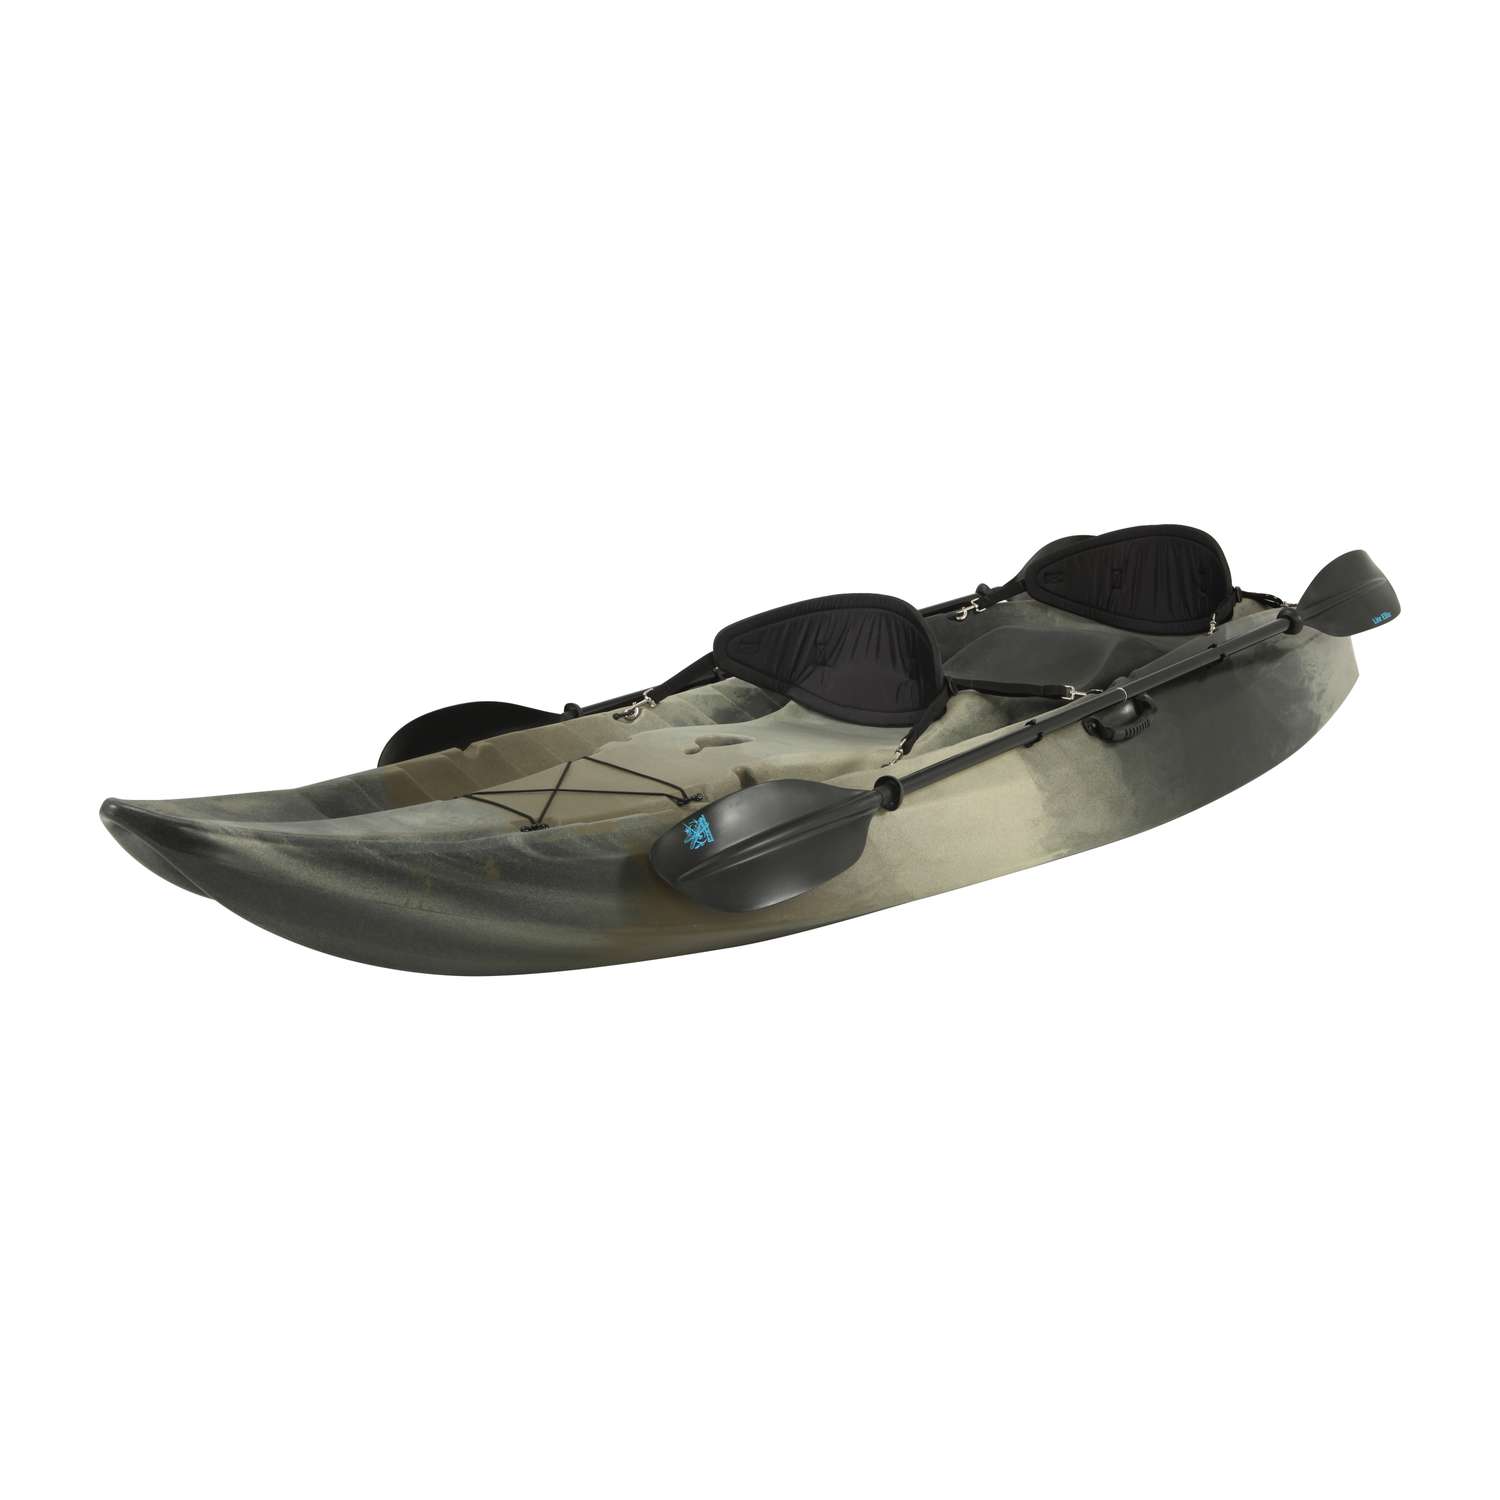 Lifetime Sport Fisher Plastic Black Fishing Kayak 19 in. H X 36 in